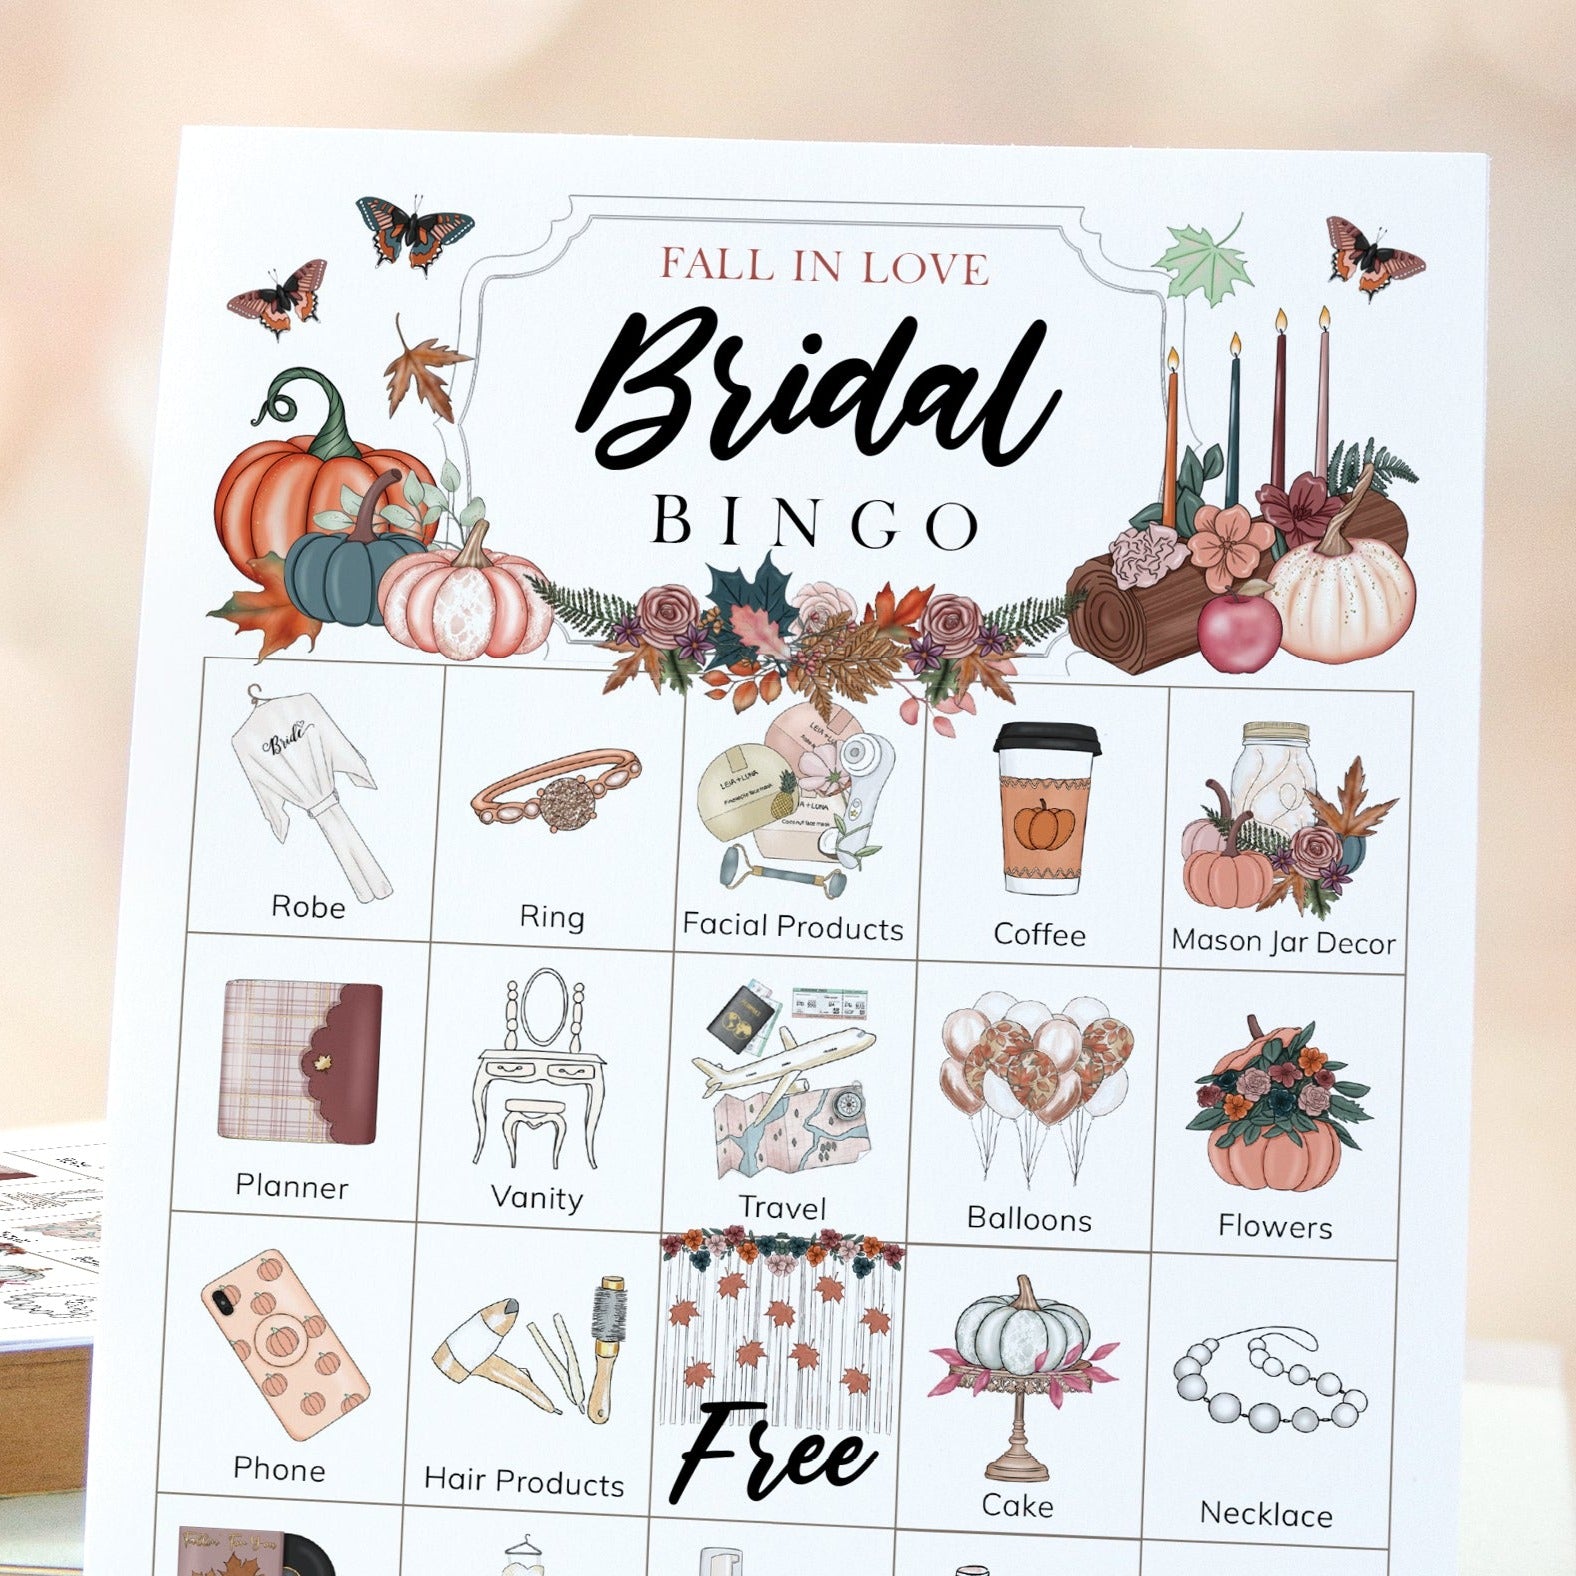 Fall / Autumn Bridal Bingo Cards